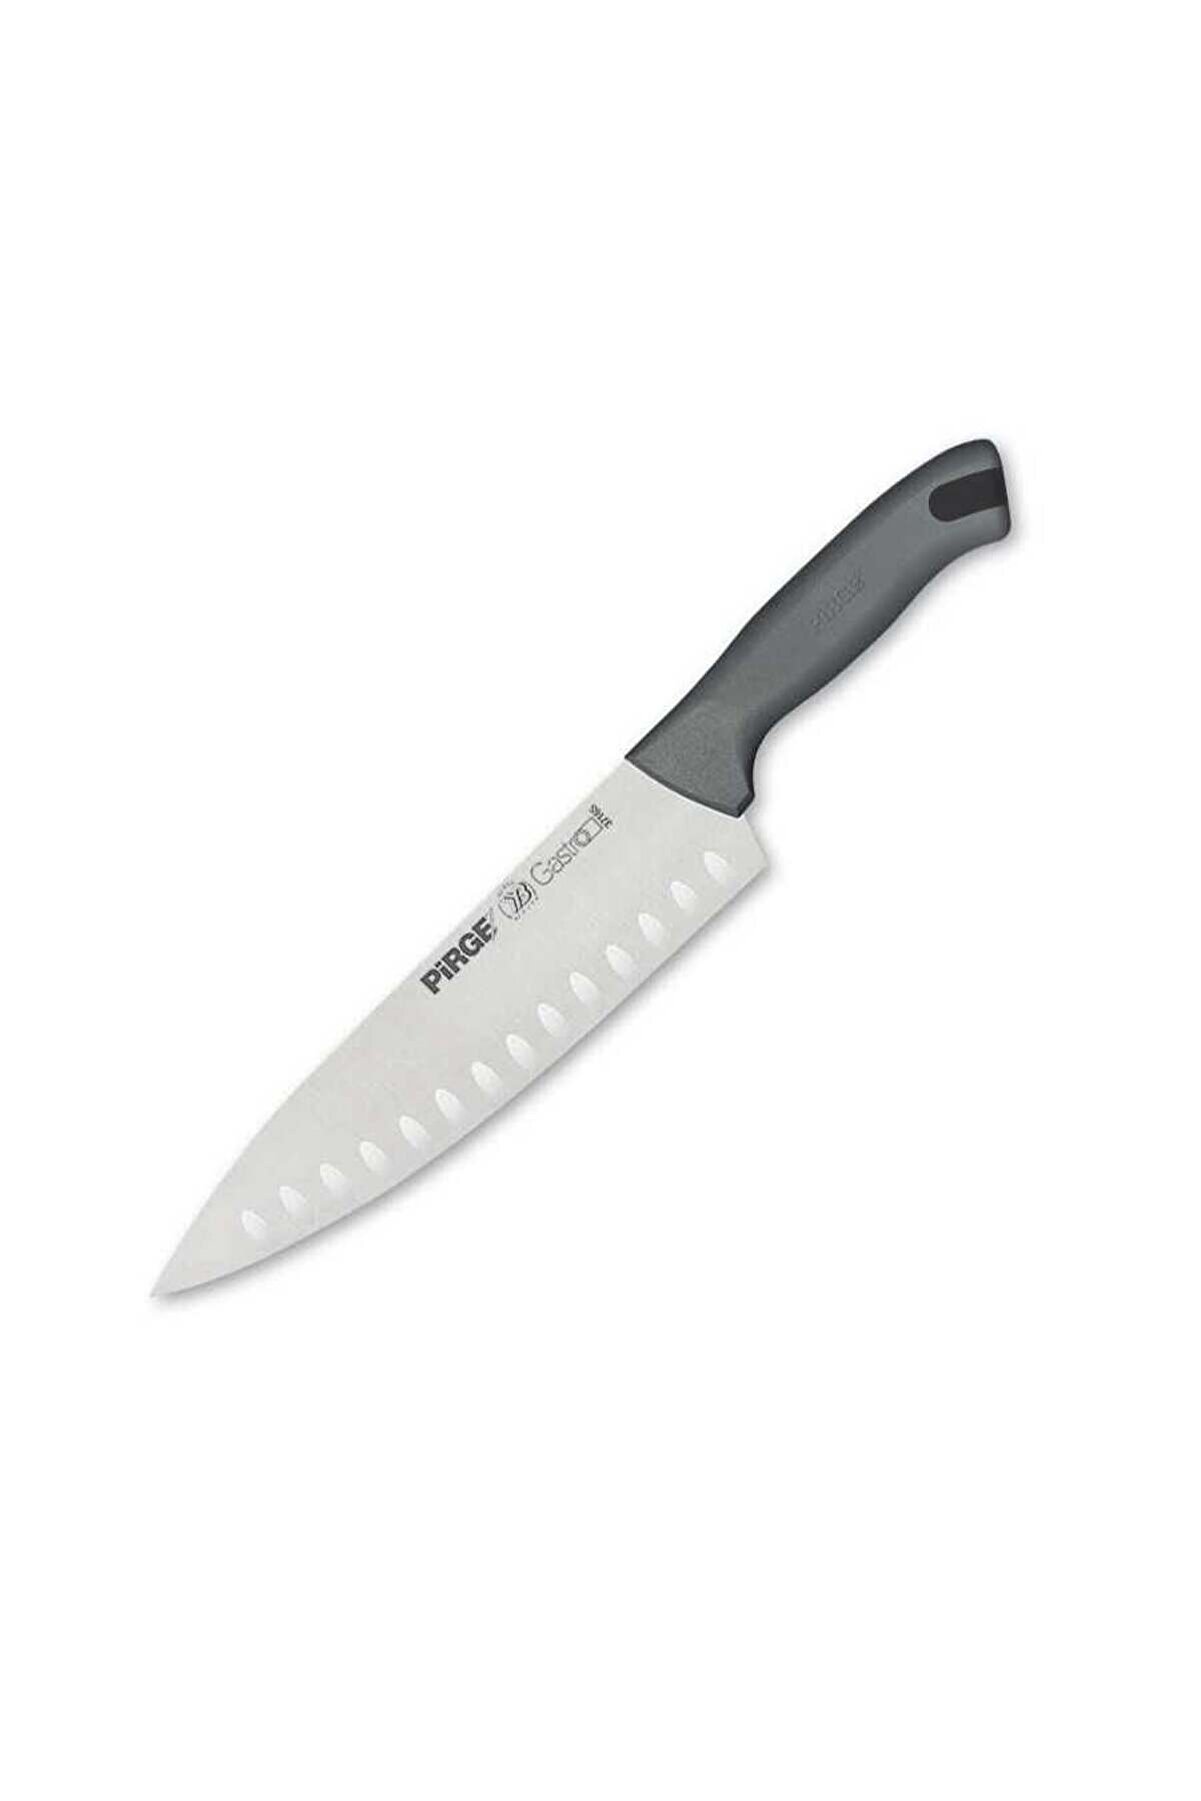 Pirge Pirge Gastro Oluklu Şef Bıçağı 23 Cm 37166